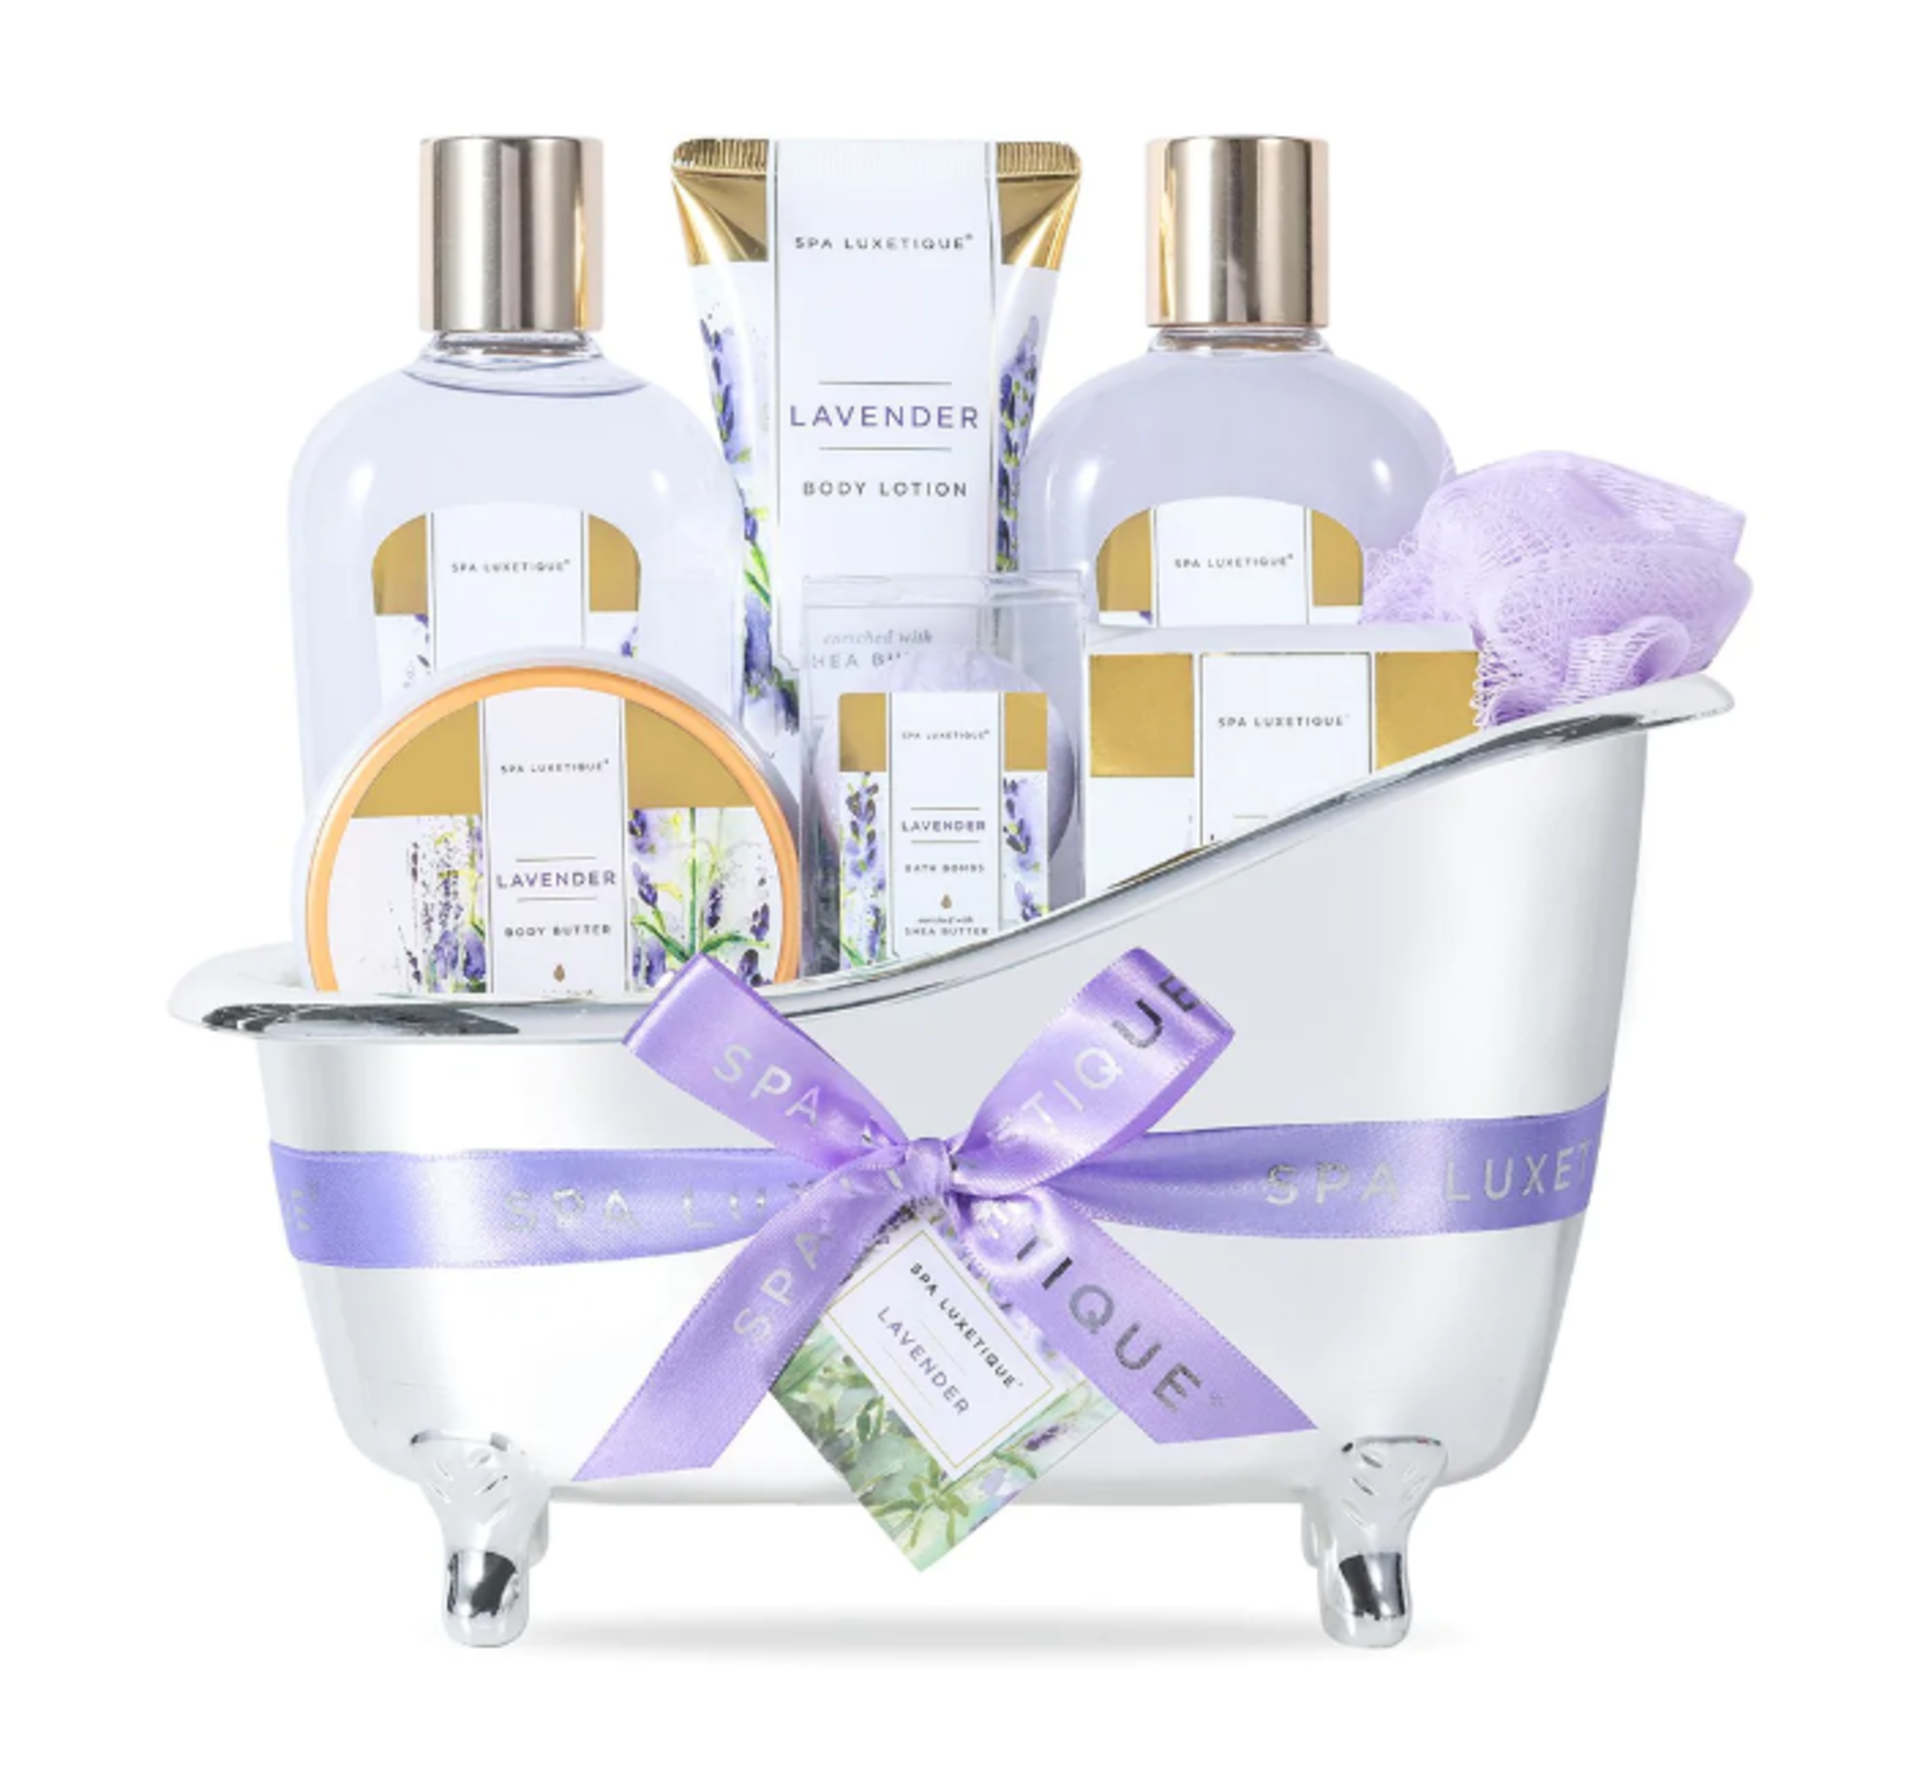 6 x NEW PACKAGED Lavender Spa Bathtub Gift Sets. (SKU: SP-18-02). Natural Bath Spa Set: Our spa gift